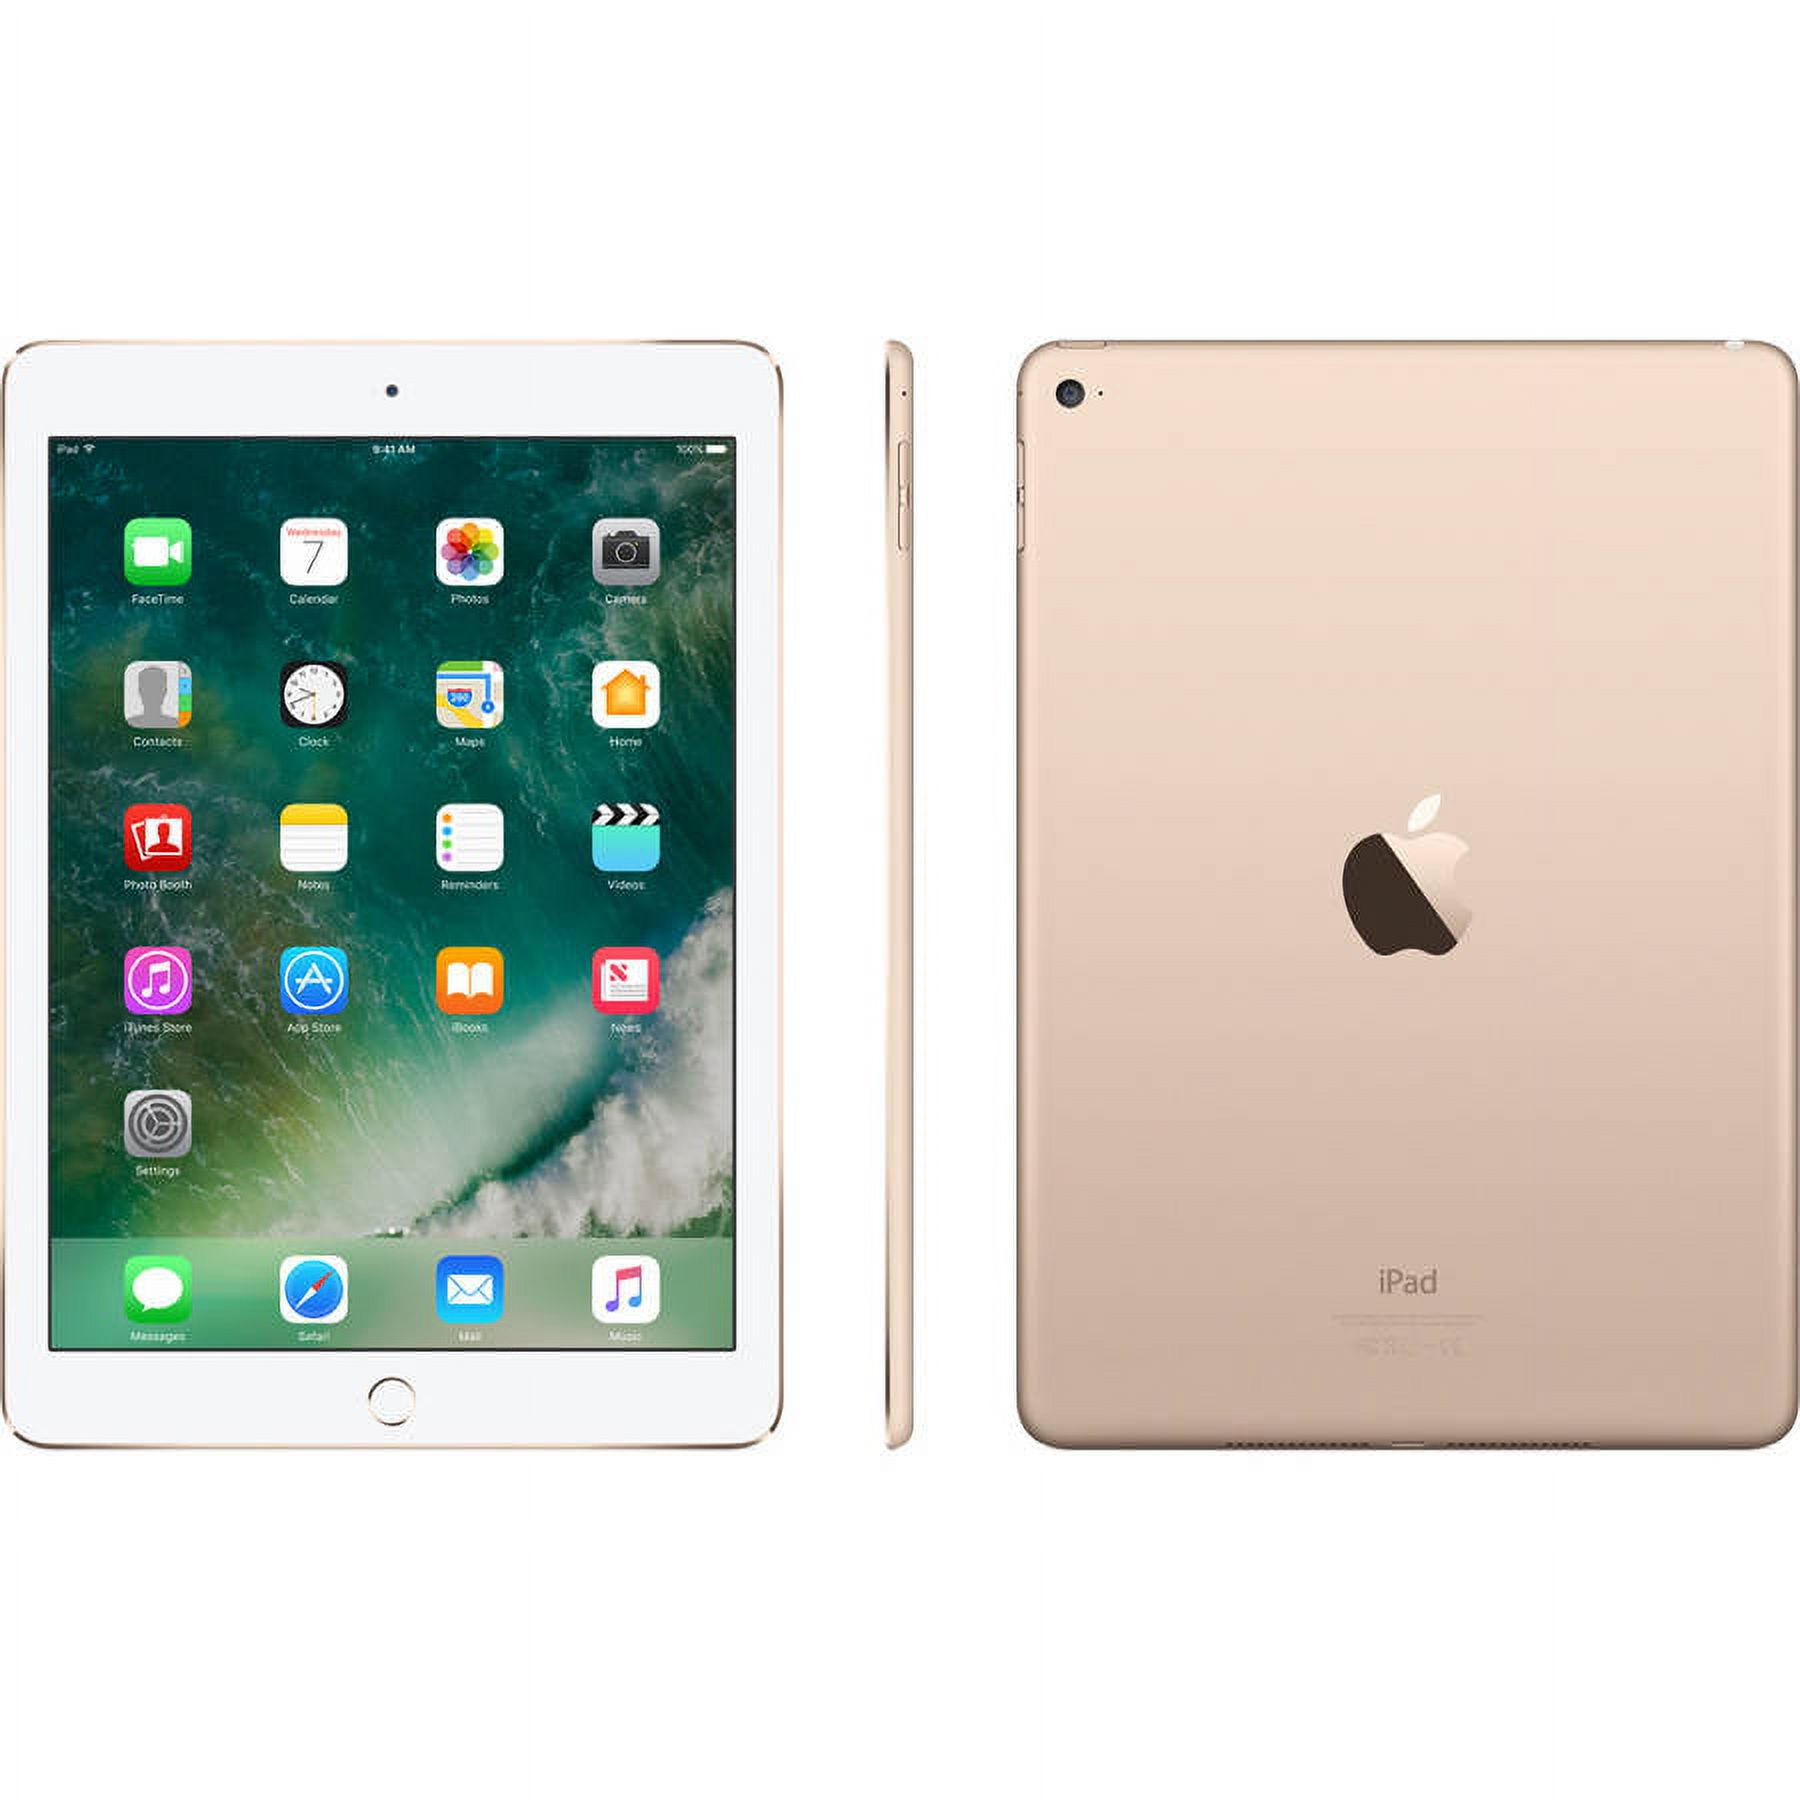 Apple iPad Air 2 Gold 16GB - image 2 of 3